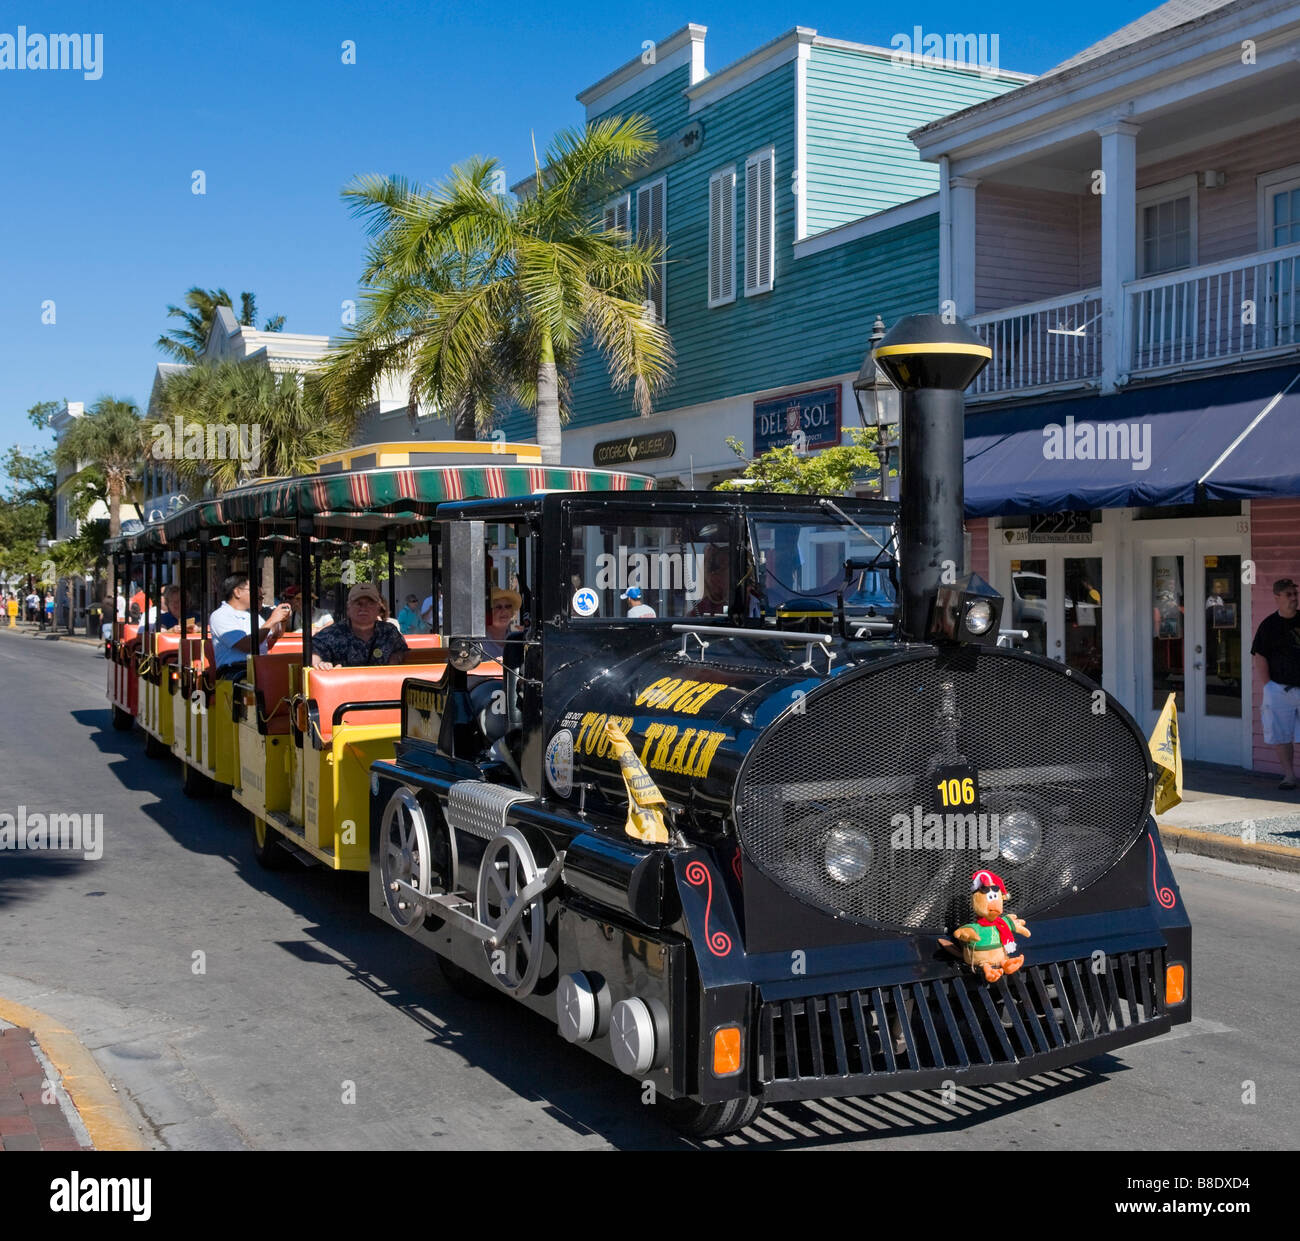 Conch Tour Train on Duval Street, Old Town, Key West, Florida Keys, USA  Stock Photo - Alamy